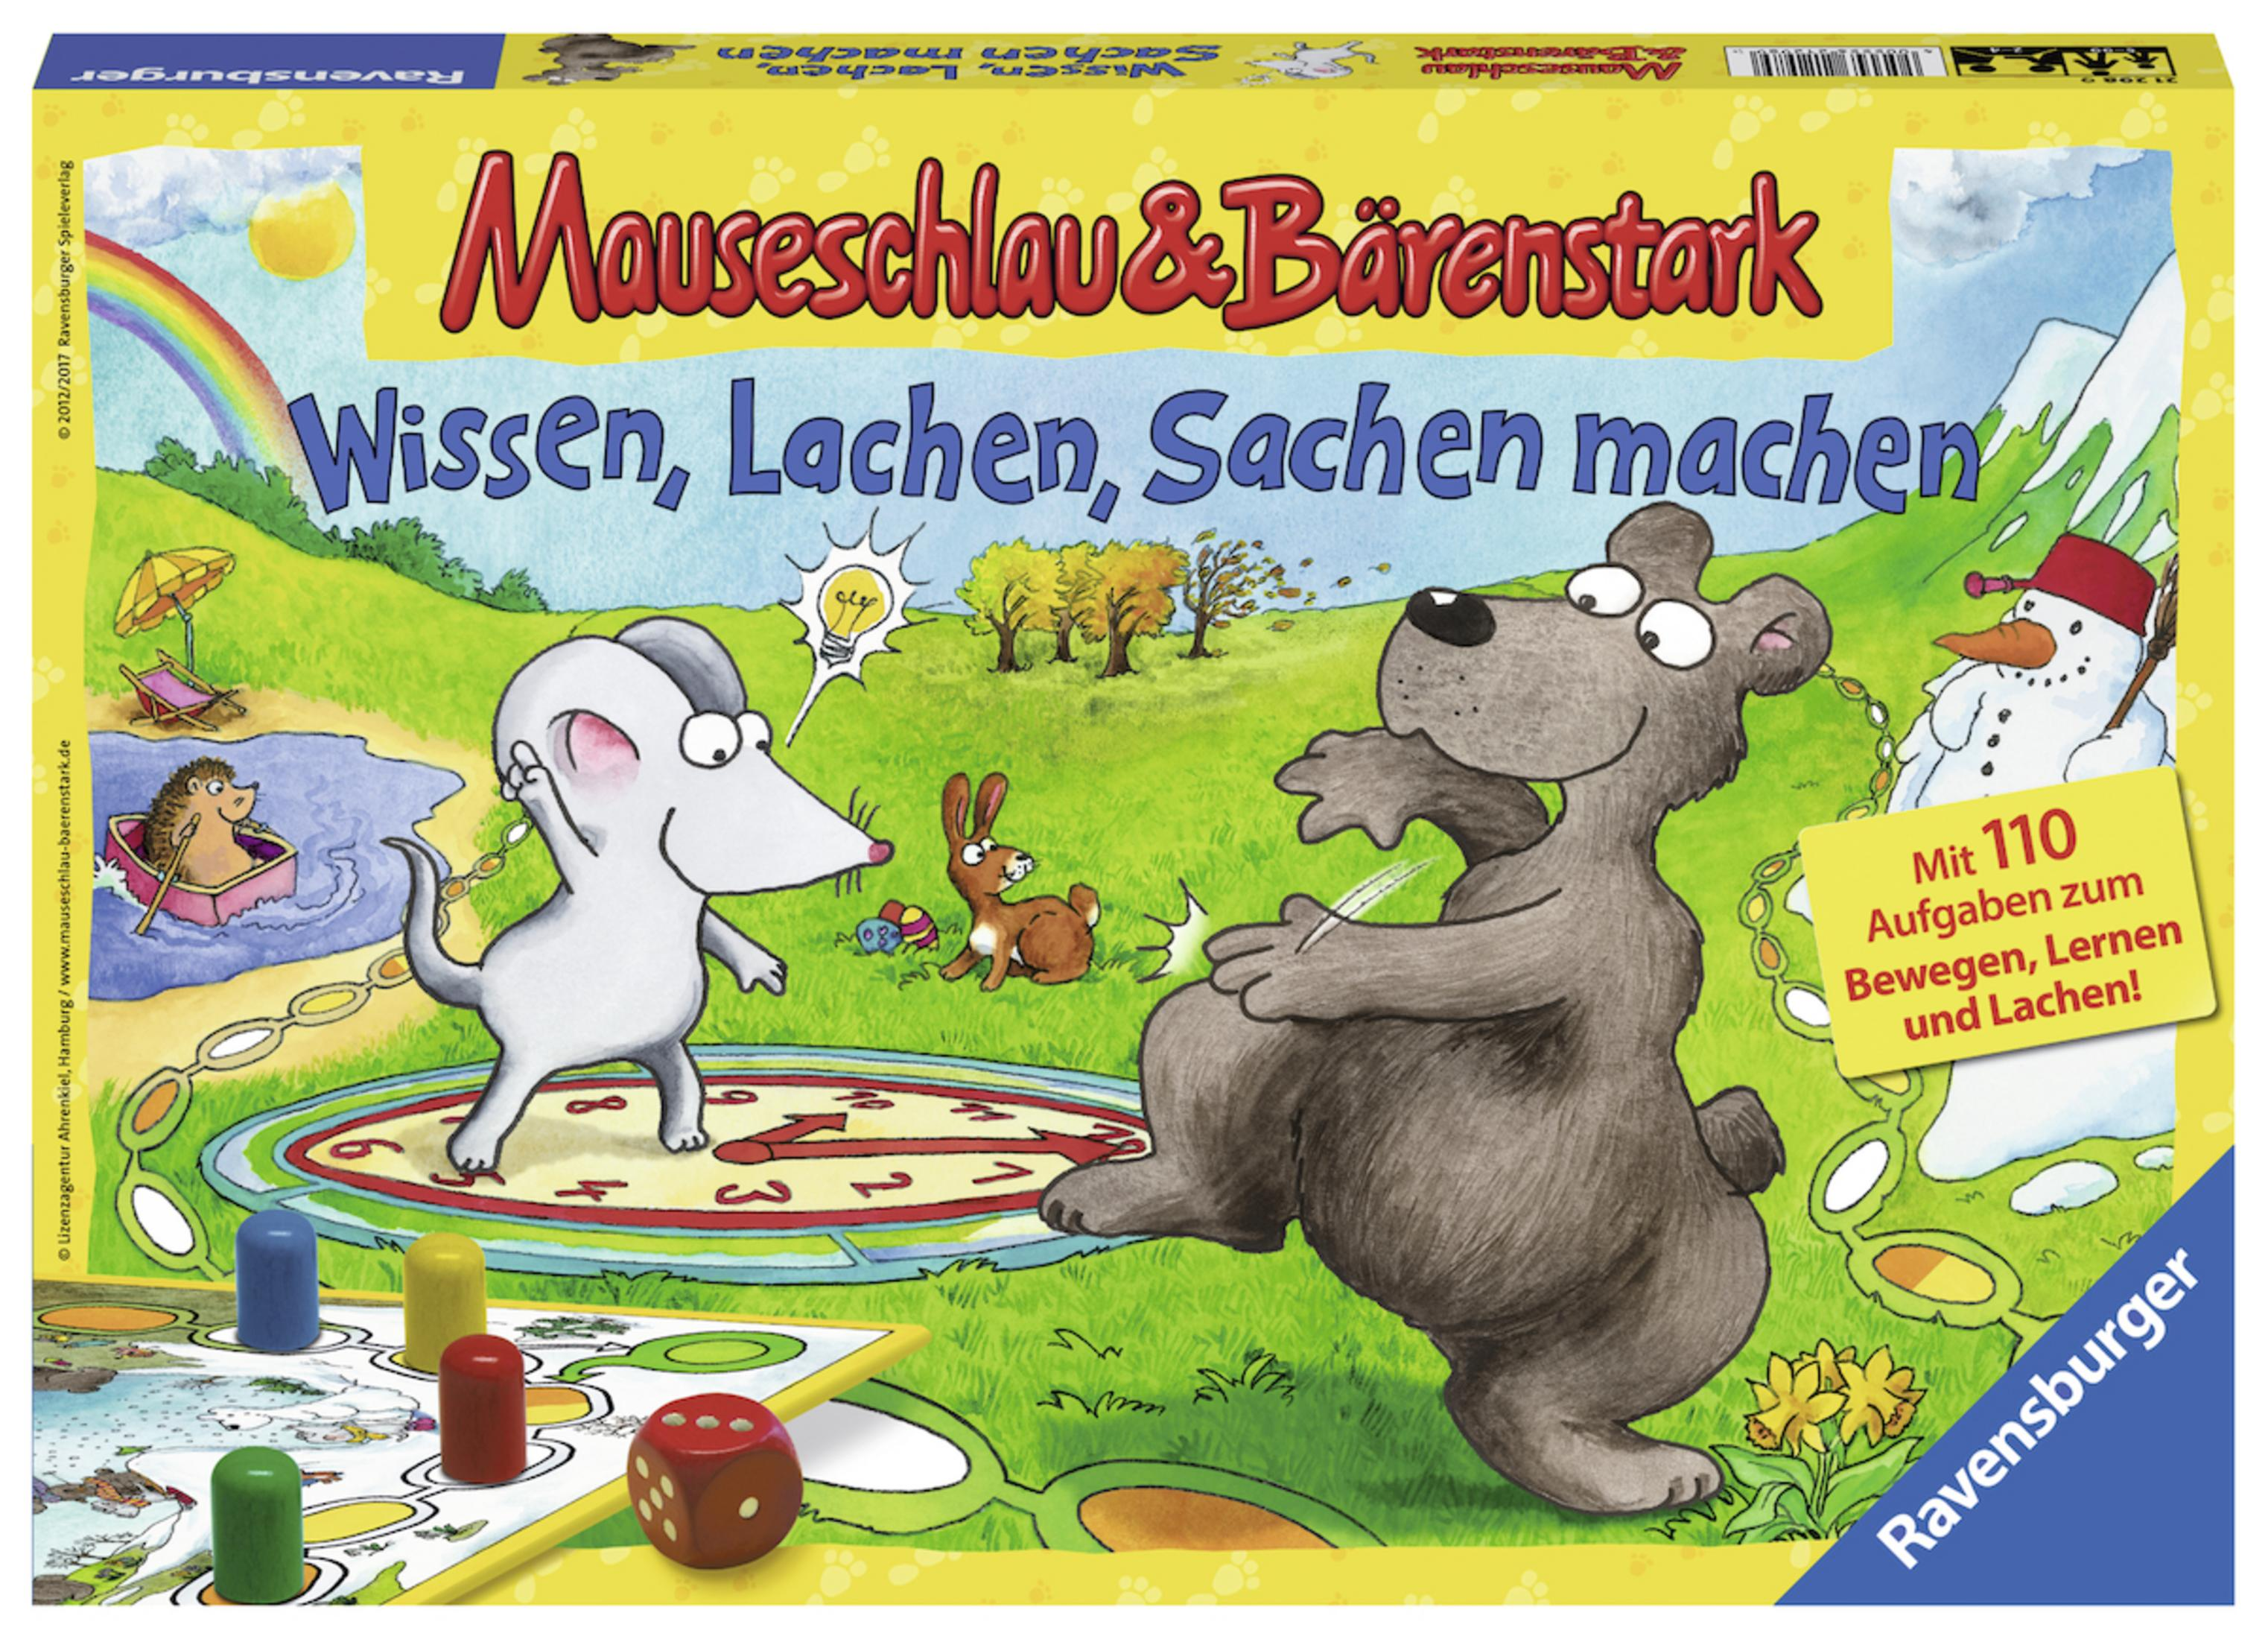 WIS & RAVENSBURGER MAUSESCHLAU Lustige Kinderspiele BÄRENSTARK 21298